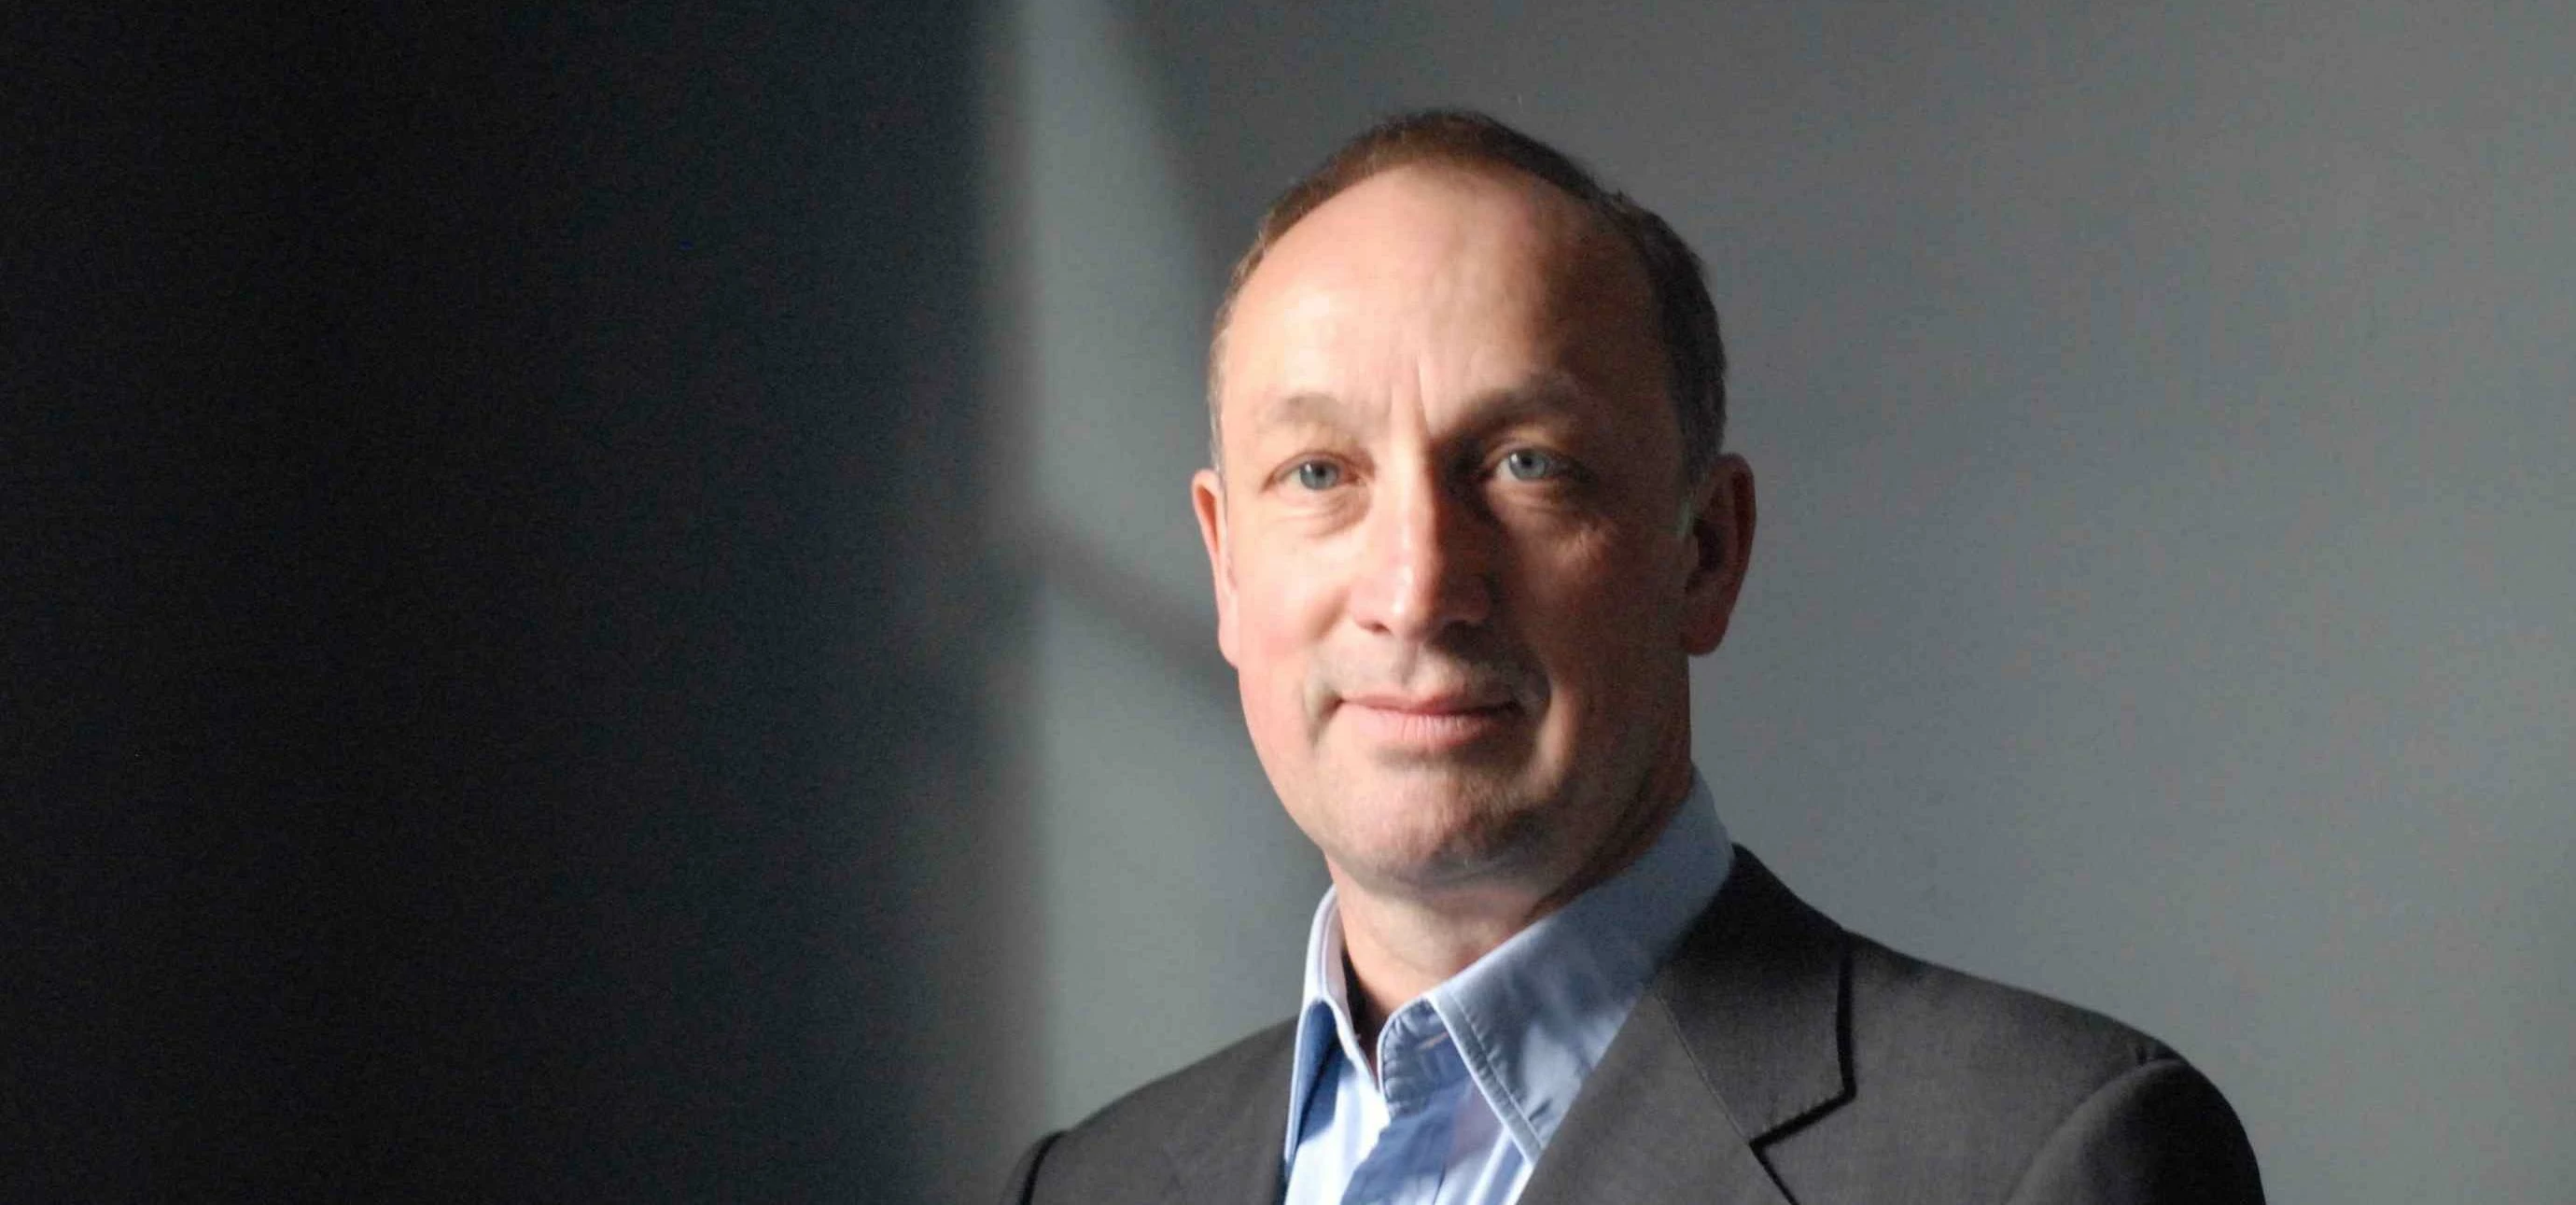 SQW Group's new chief executive, David Chrichton-Miller